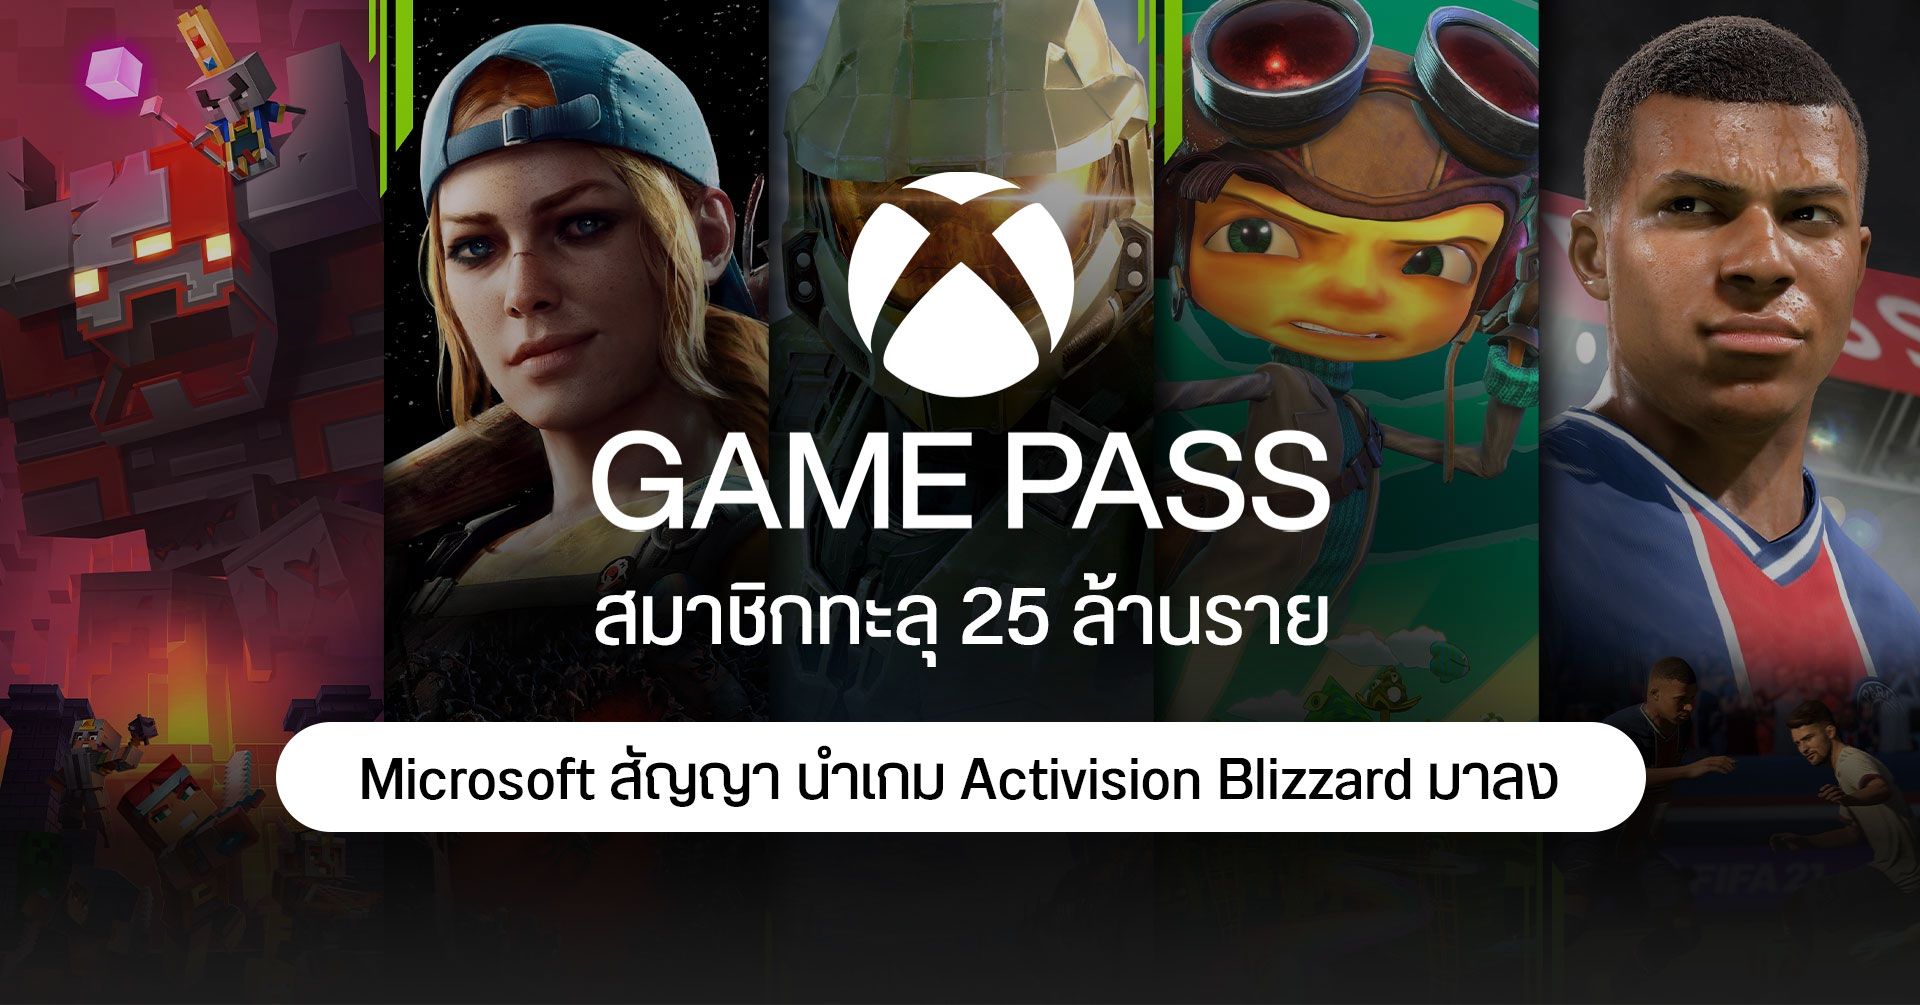 Xbox Game Pass มีสมาชิกทะลุ 25 ล้านรายแล้ว Microsoft เตรียมนำเกมใหม่ ๆ มาลงอีกเพียบ